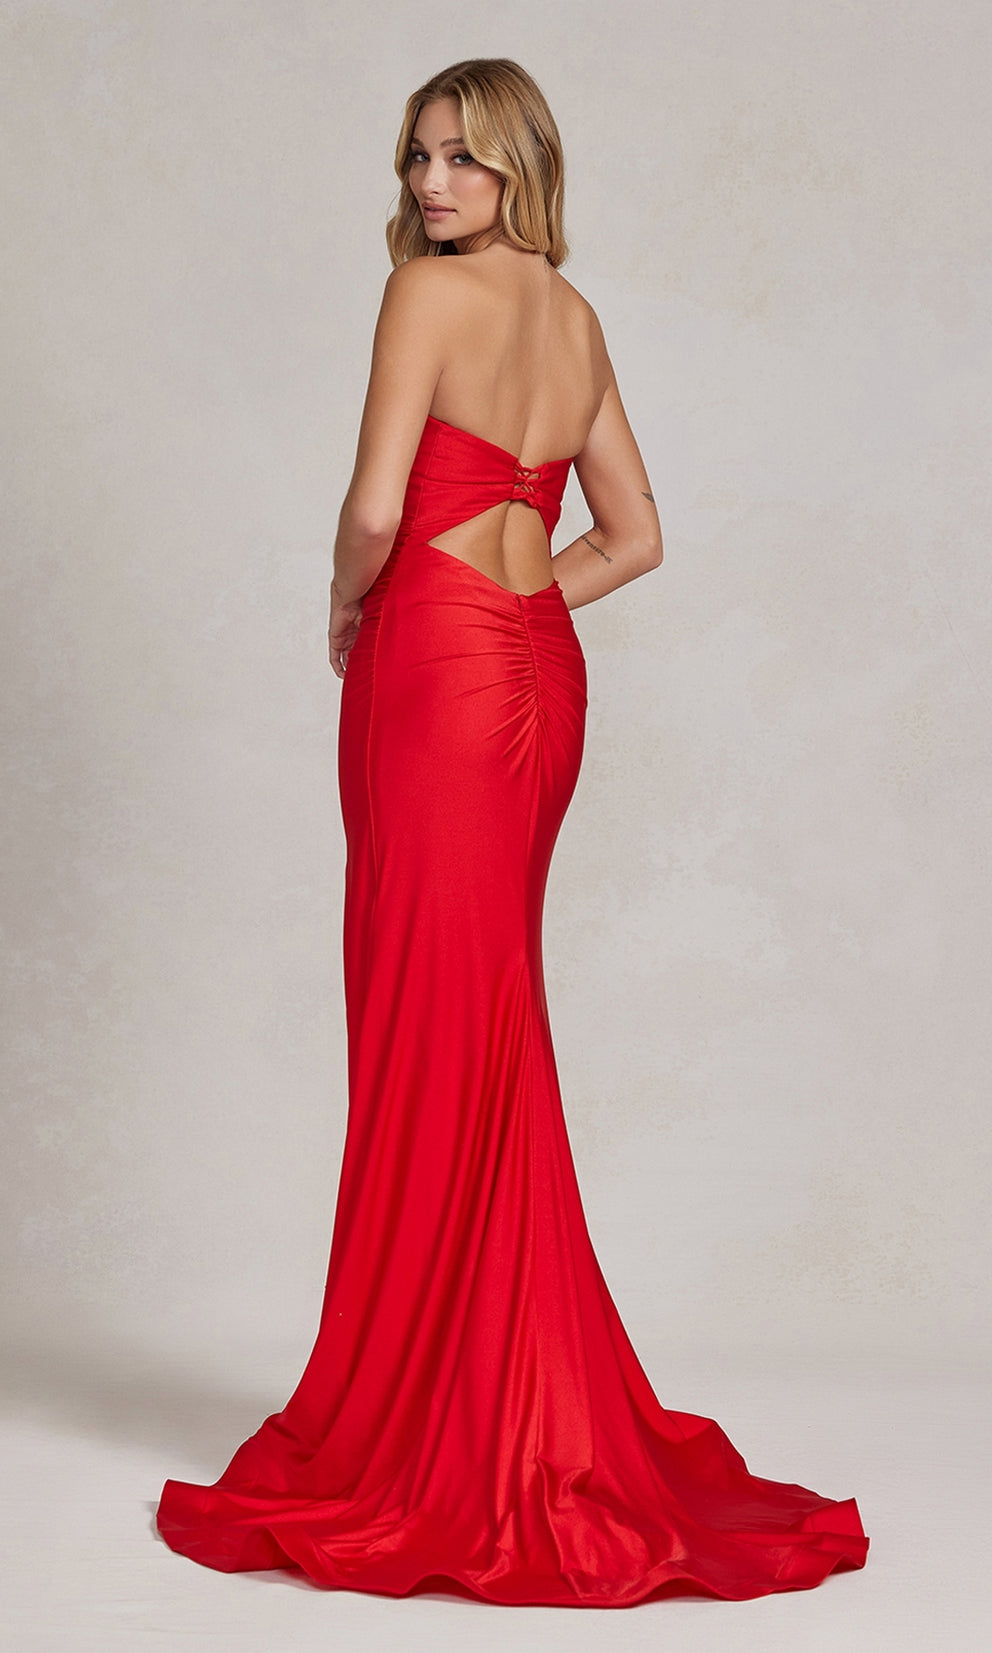 SHLIOH Red Strapless Bum Scrunch Corset Back Prom & Formal Dress